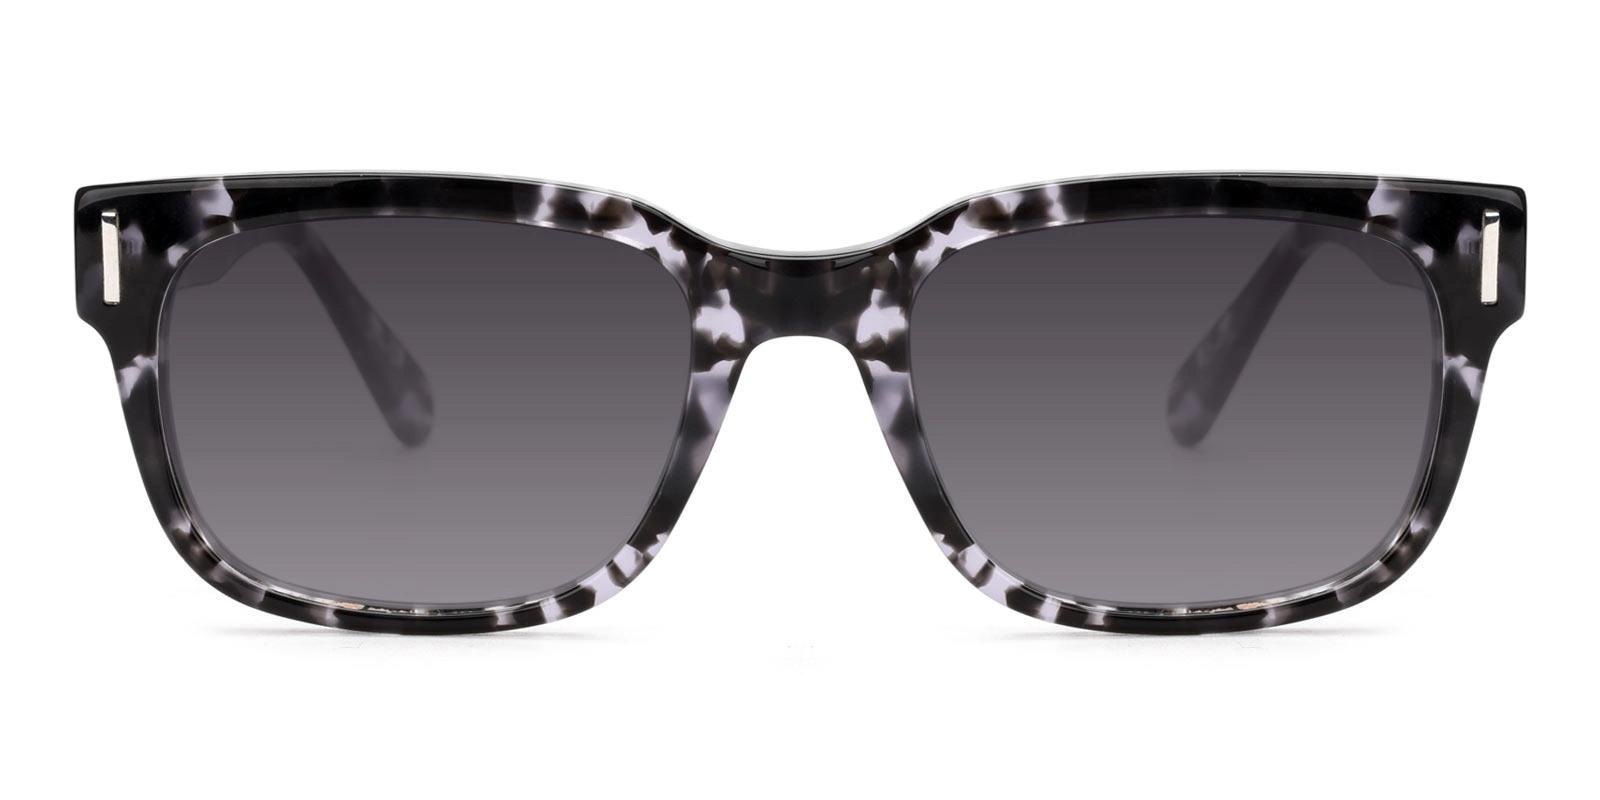 Expertee Pattern Acetate Sunglasses , UniversalBridgeFit Frames from ABBE Glasses